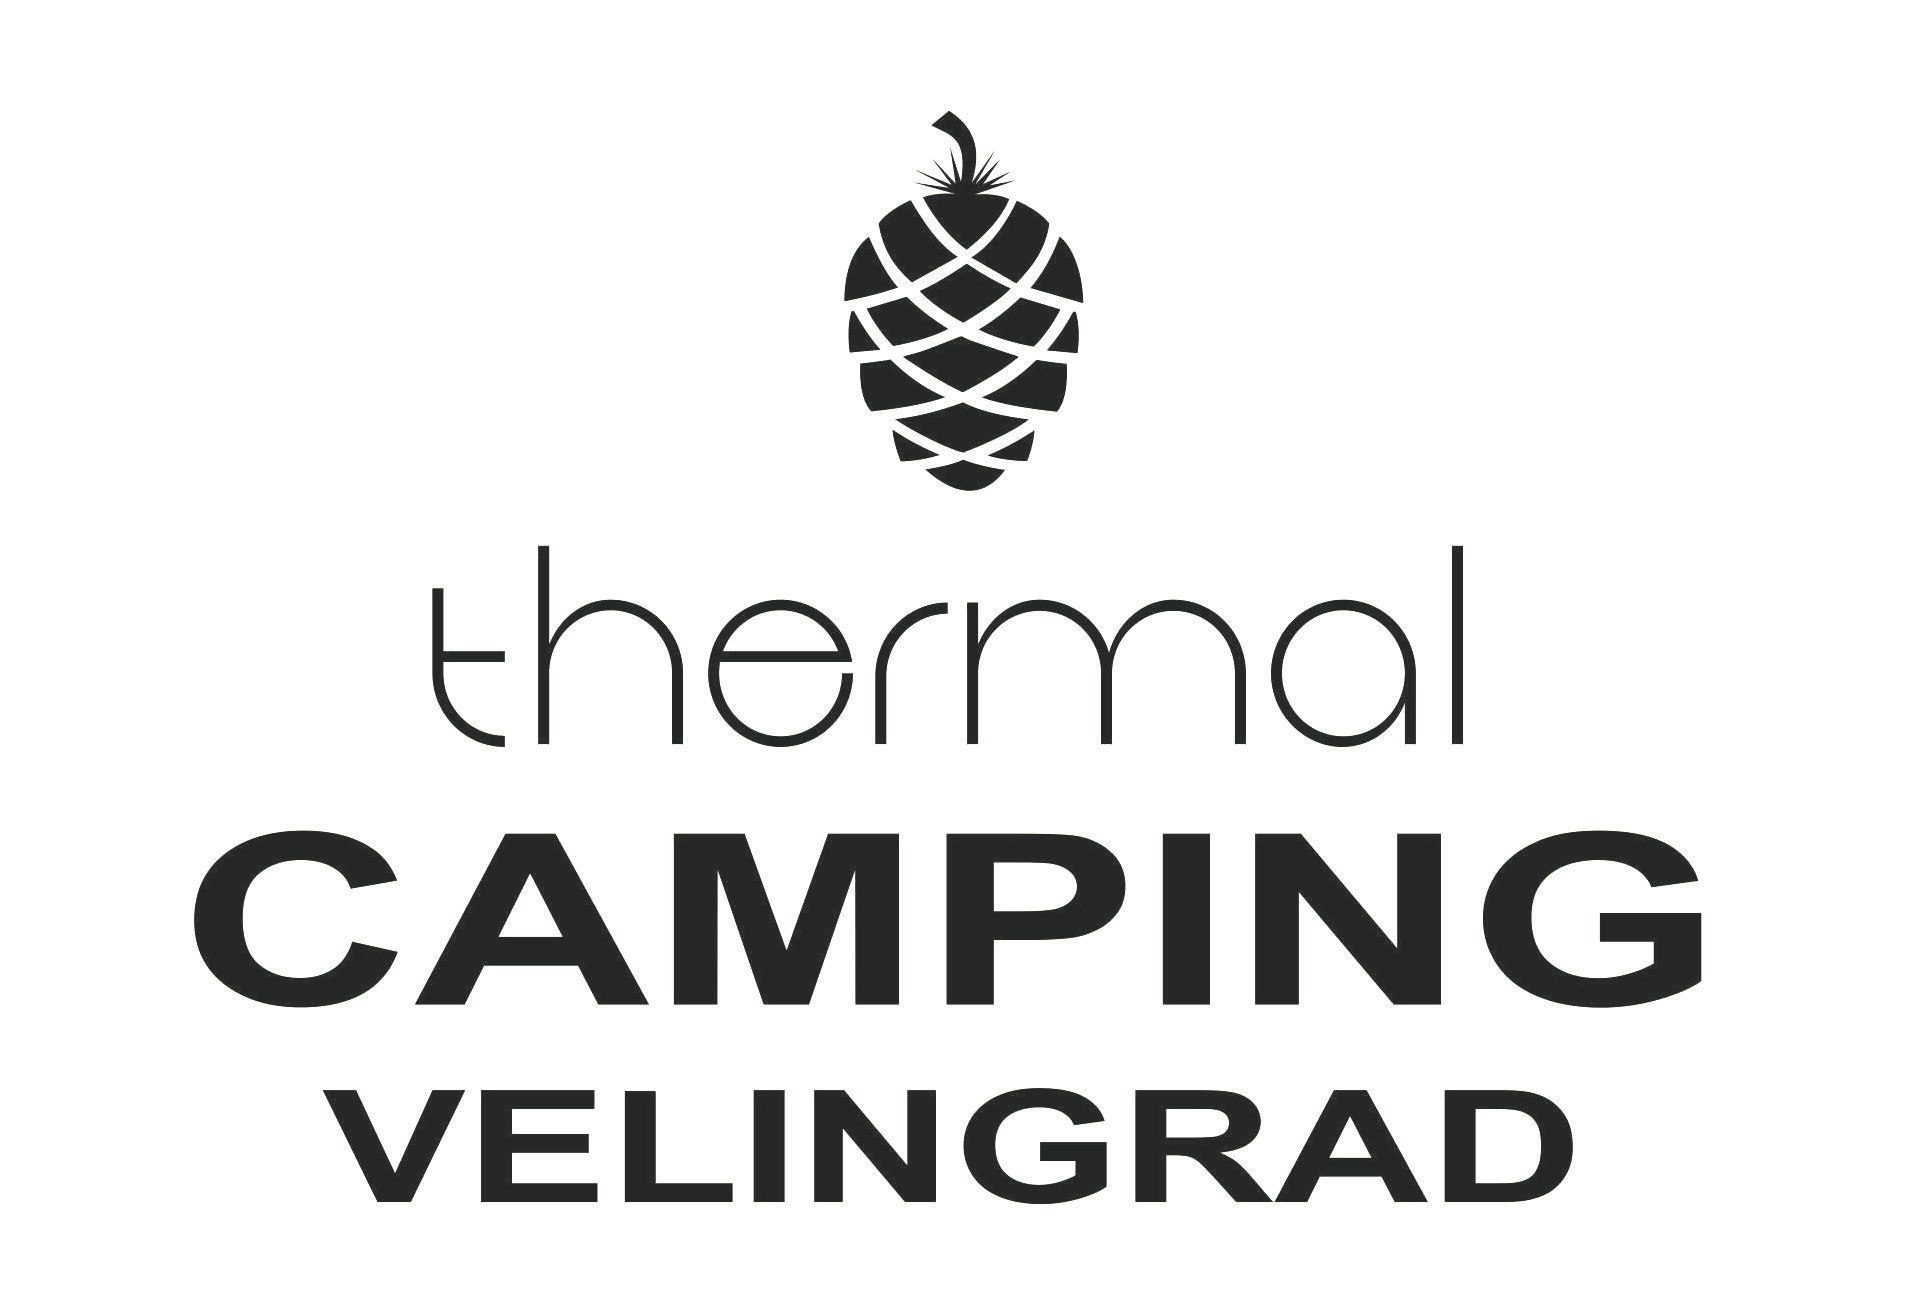 Thermal Camping Velingrad